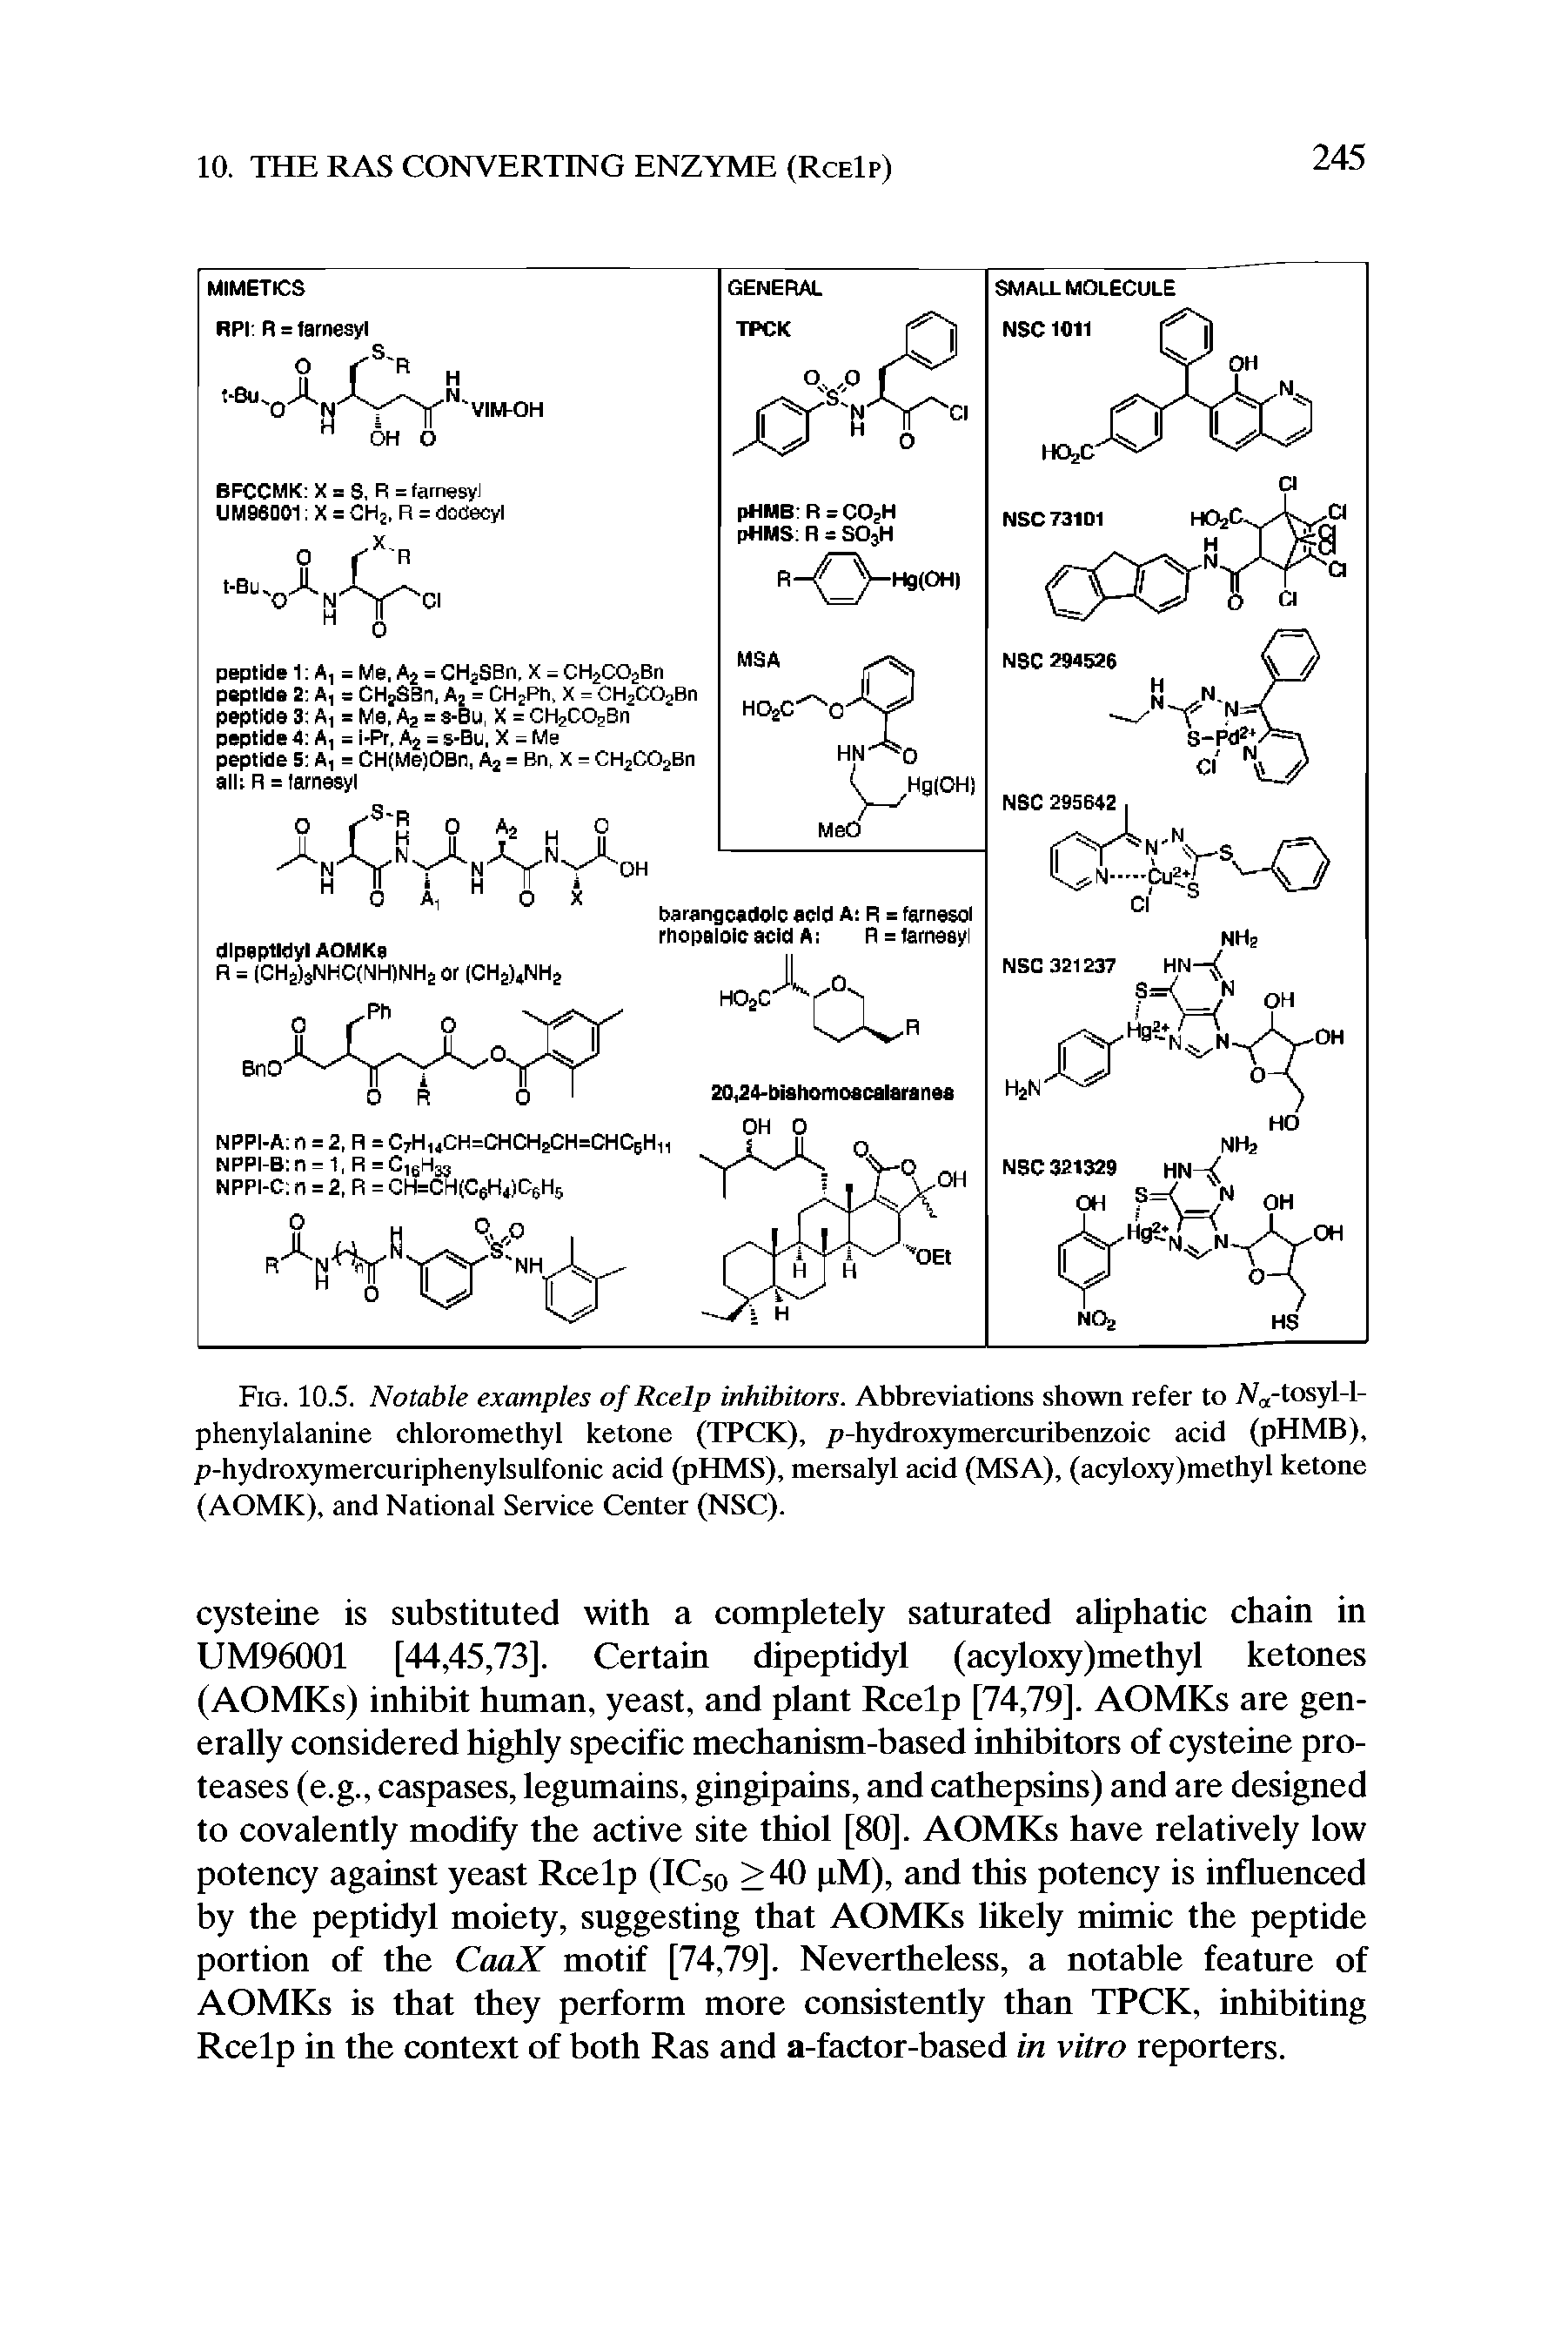 Fig. 10.5. Notable examples of Rcelp inhibitors. Abbreviations shown refer to At,-tosyl-l-phenylalanine chloromethyl ketone (TPCK), p-hydroxymercnribenzoic acid (pHMB), p-hydroxymercuriphenylsulfonic acid (pHMS), mersalyl acid (MSA), (acyloxy)methyl ketone (AOMK), and National Service Center (NSC).